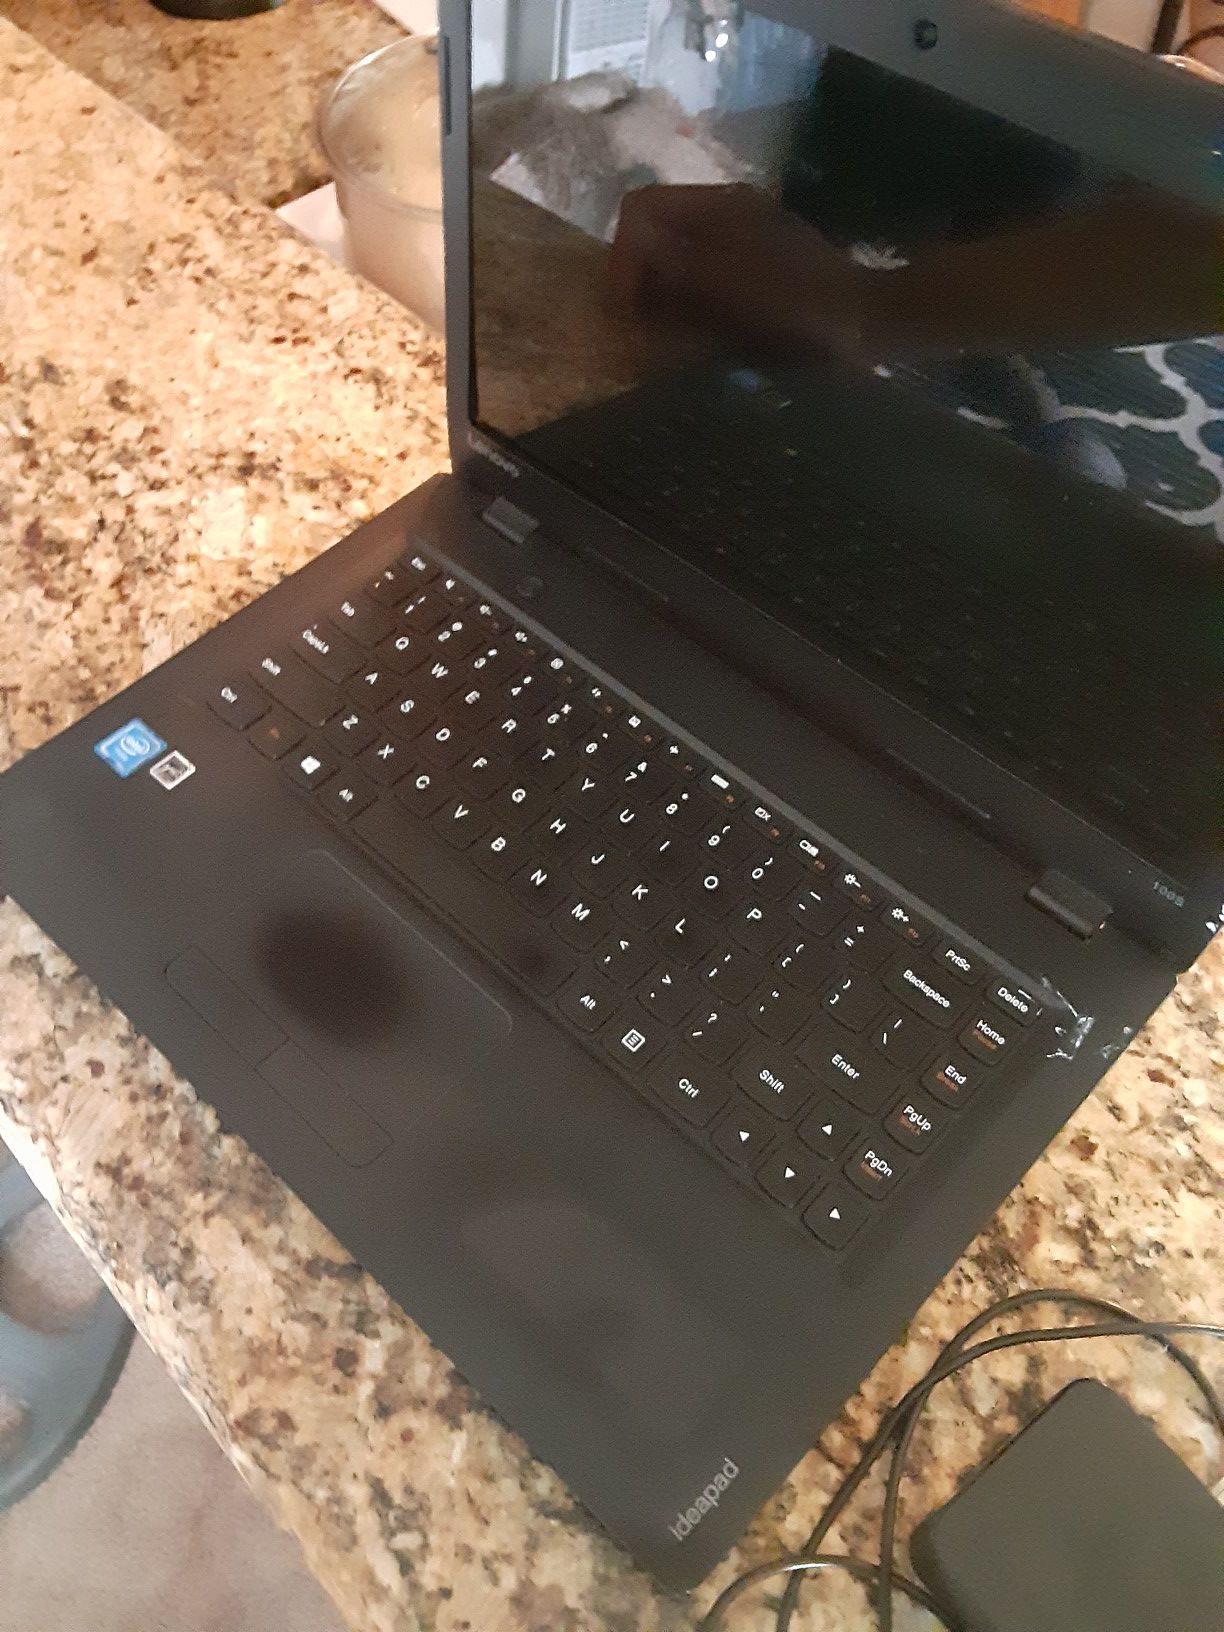 Lenovo 100s ideapad (used laptop)